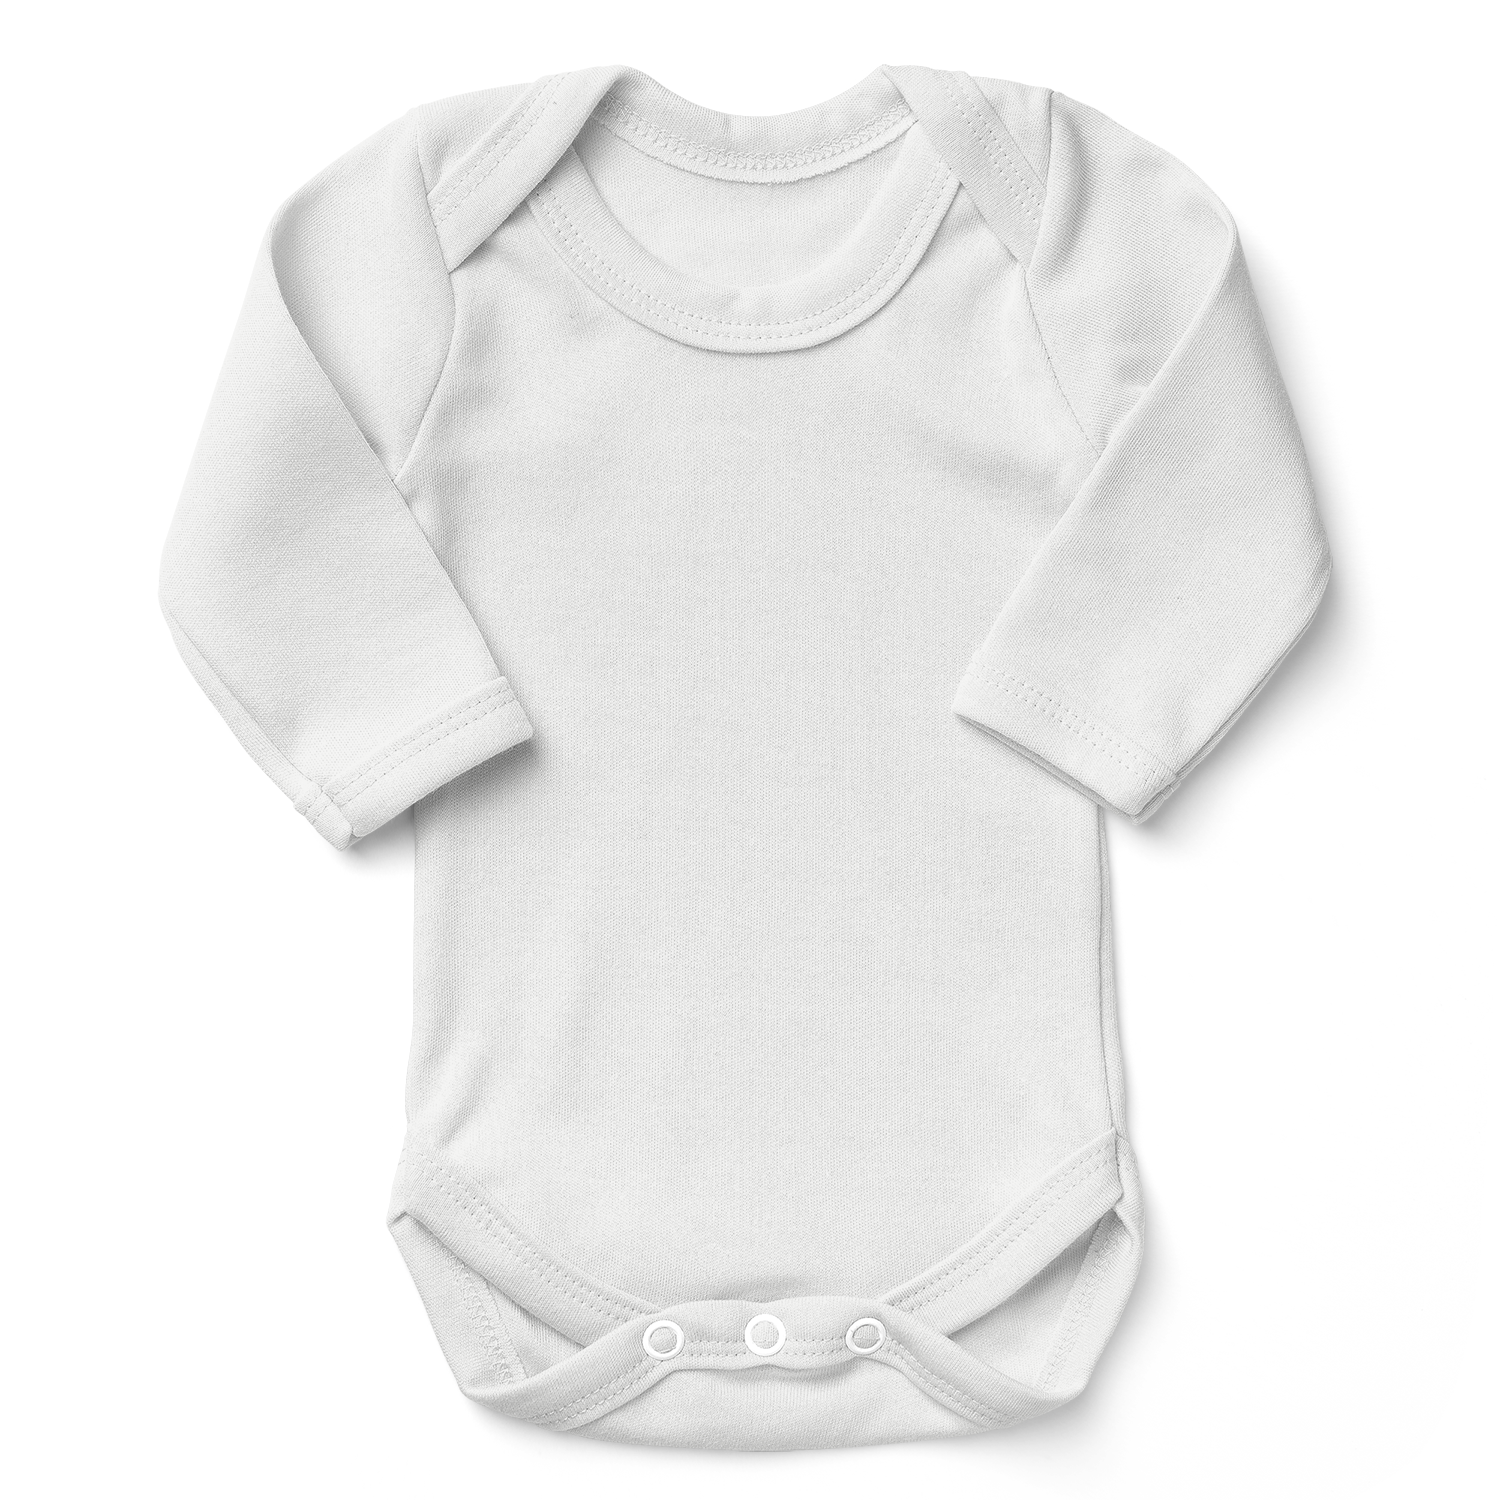 Polish Tradition Tiny Edition Infant Bodysuit - Polish Shirt Store